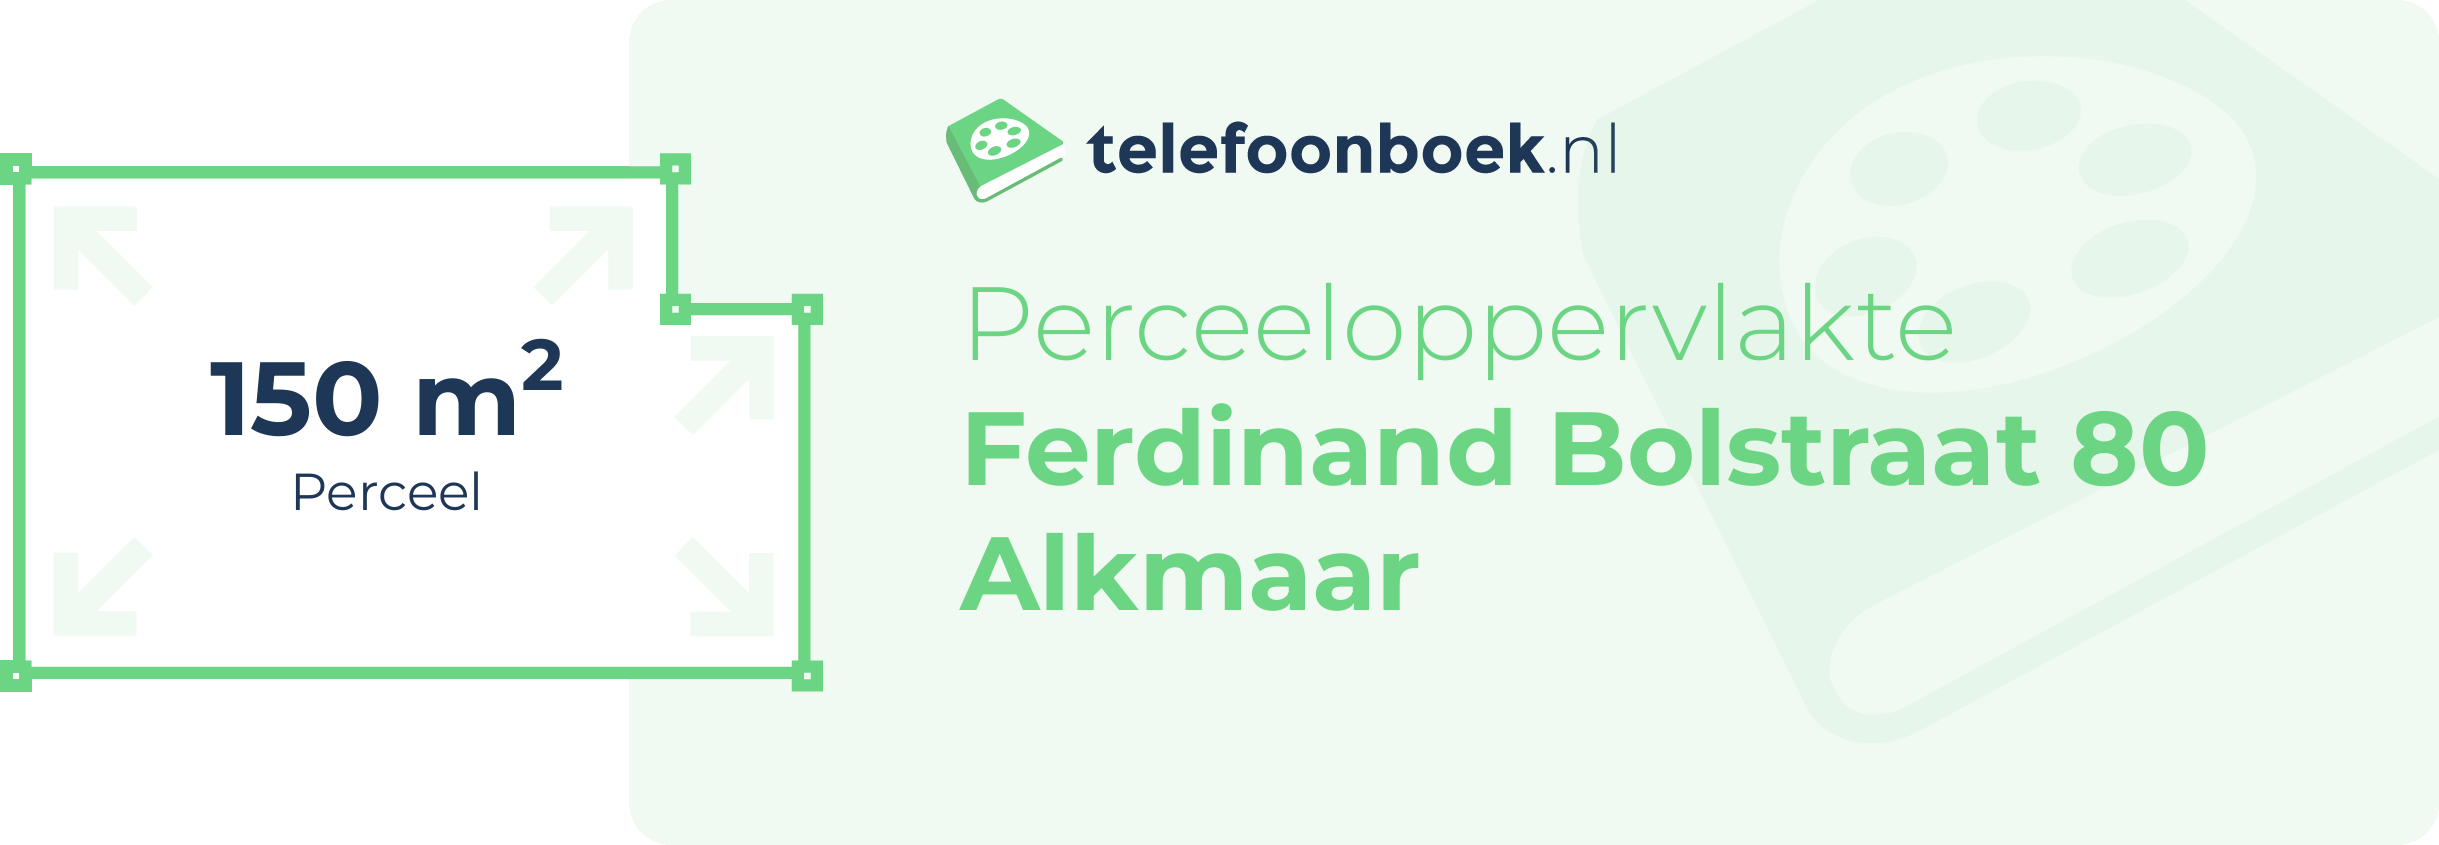 Perceeloppervlakte Ferdinand Bolstraat 80 Alkmaar